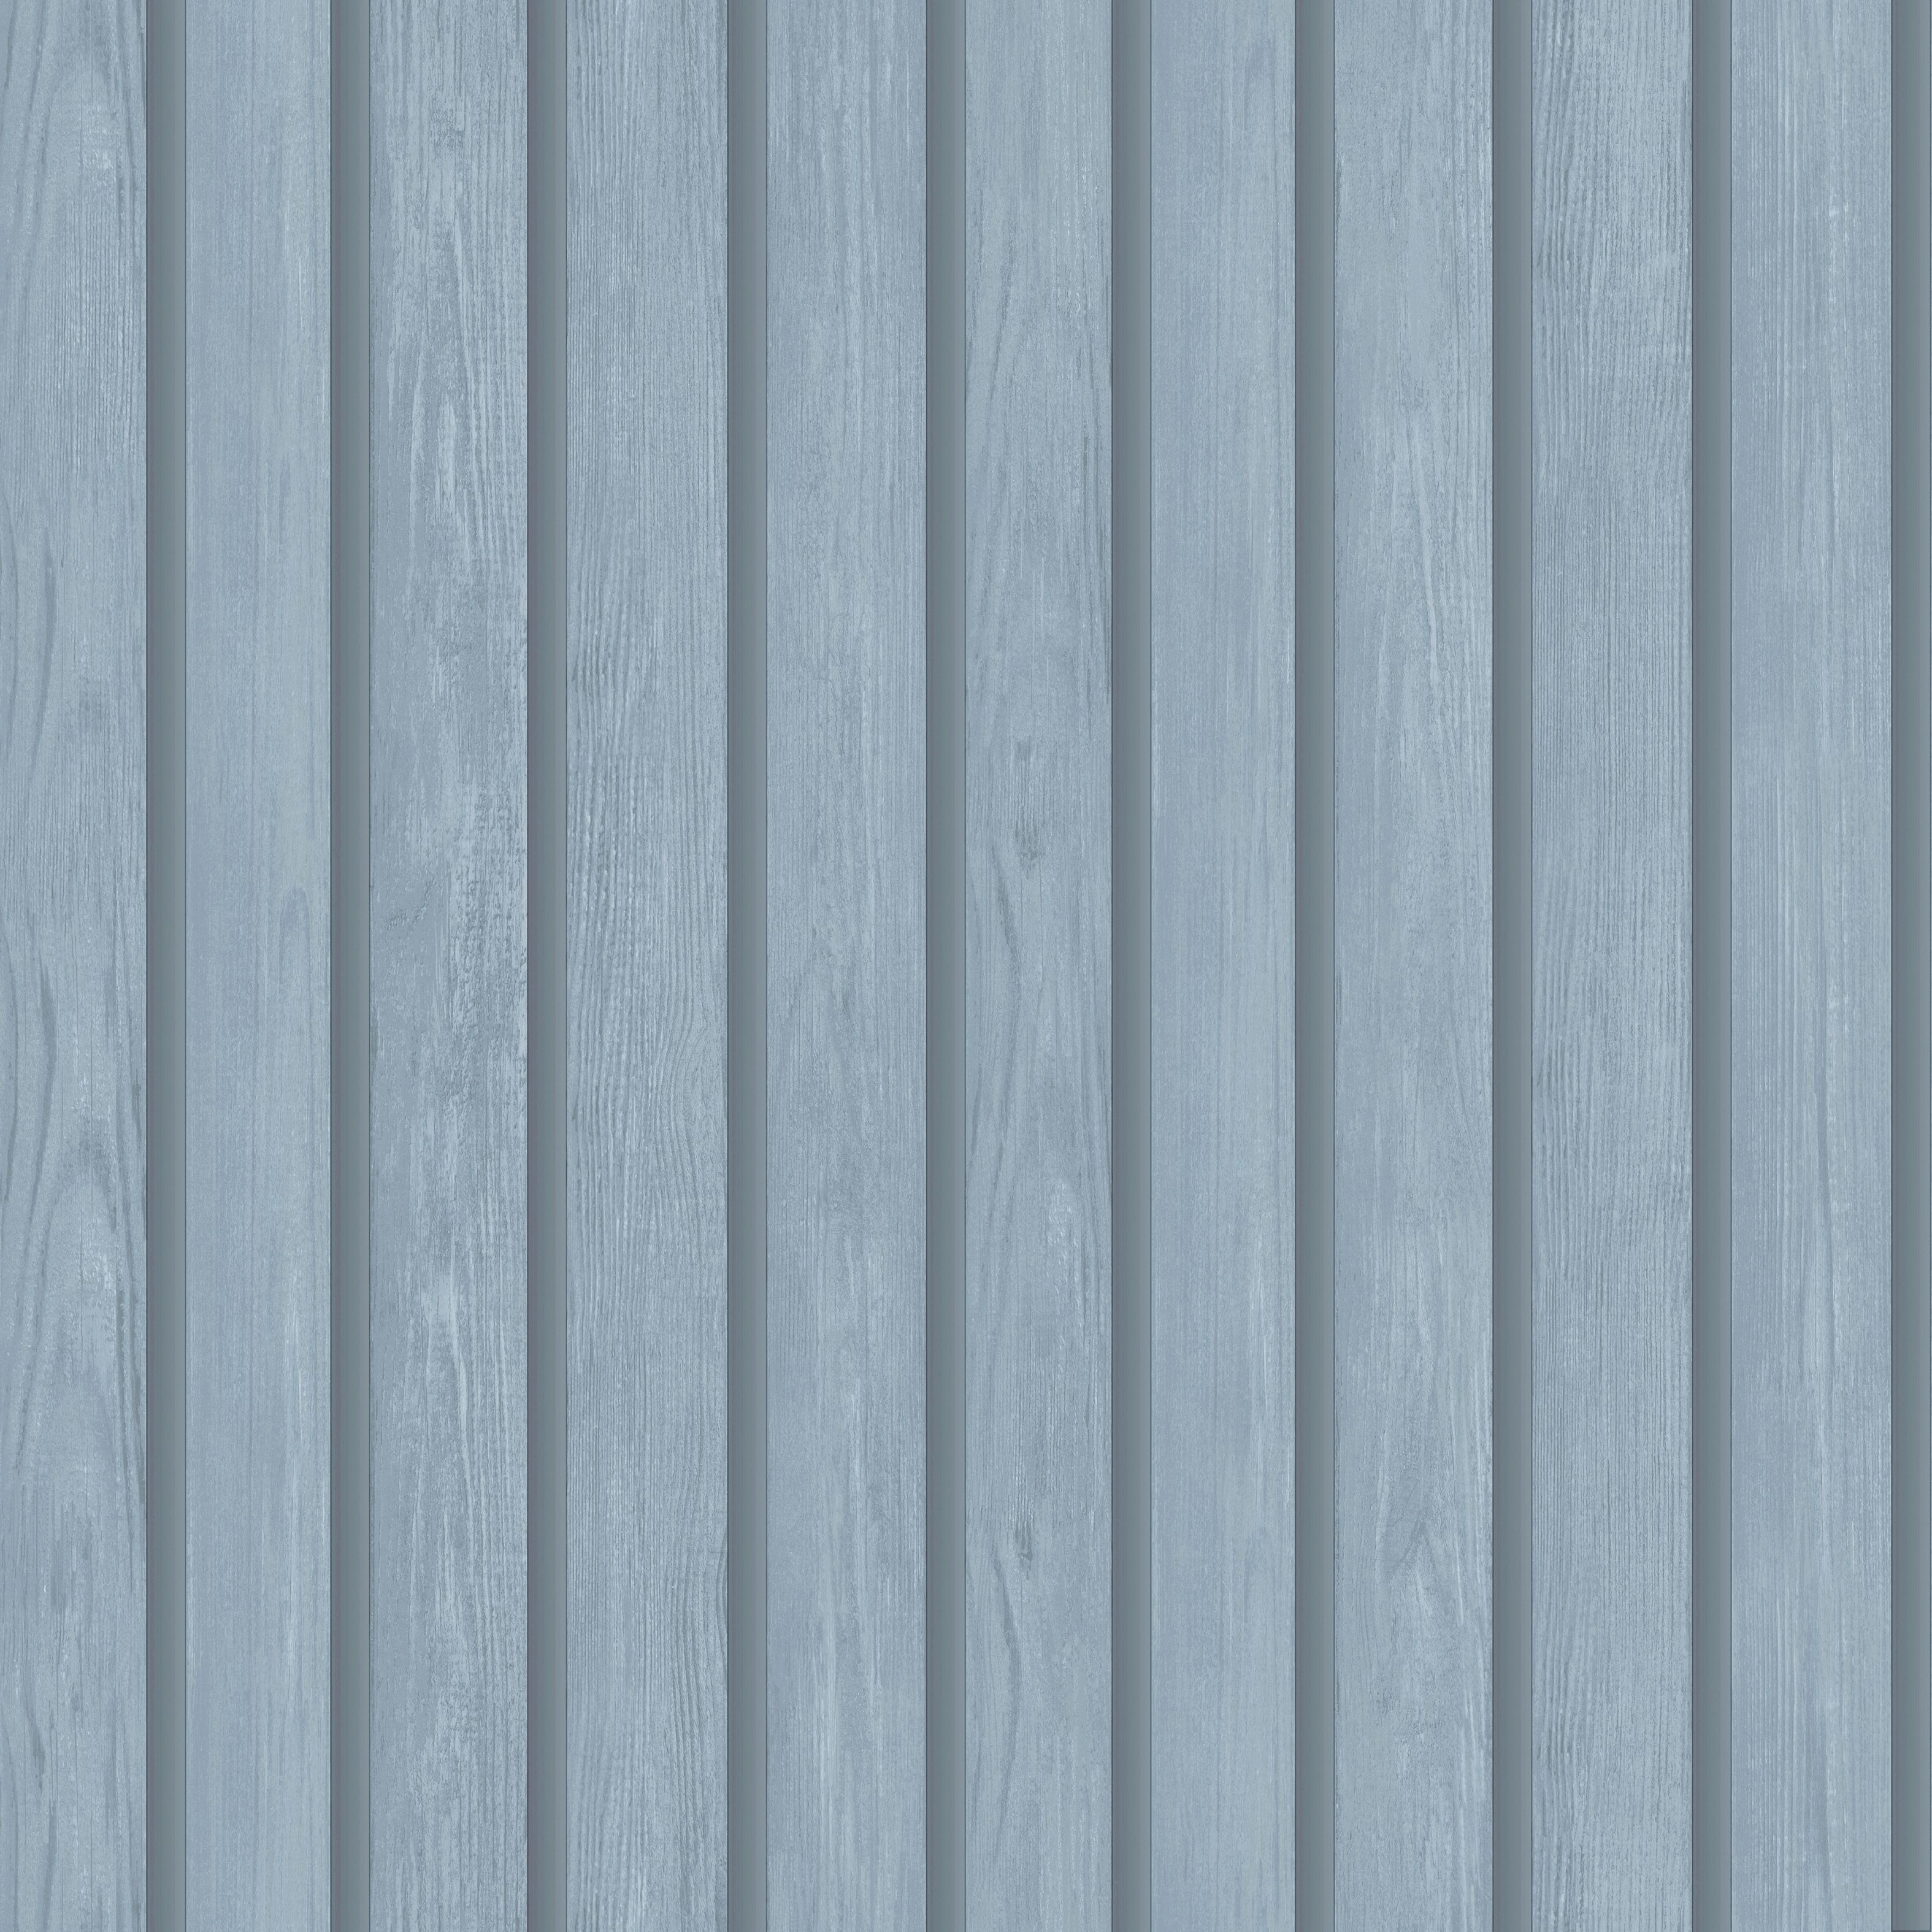 Holden Decor Wood Slat Blue Wallpaper - 10.05m x 53cm